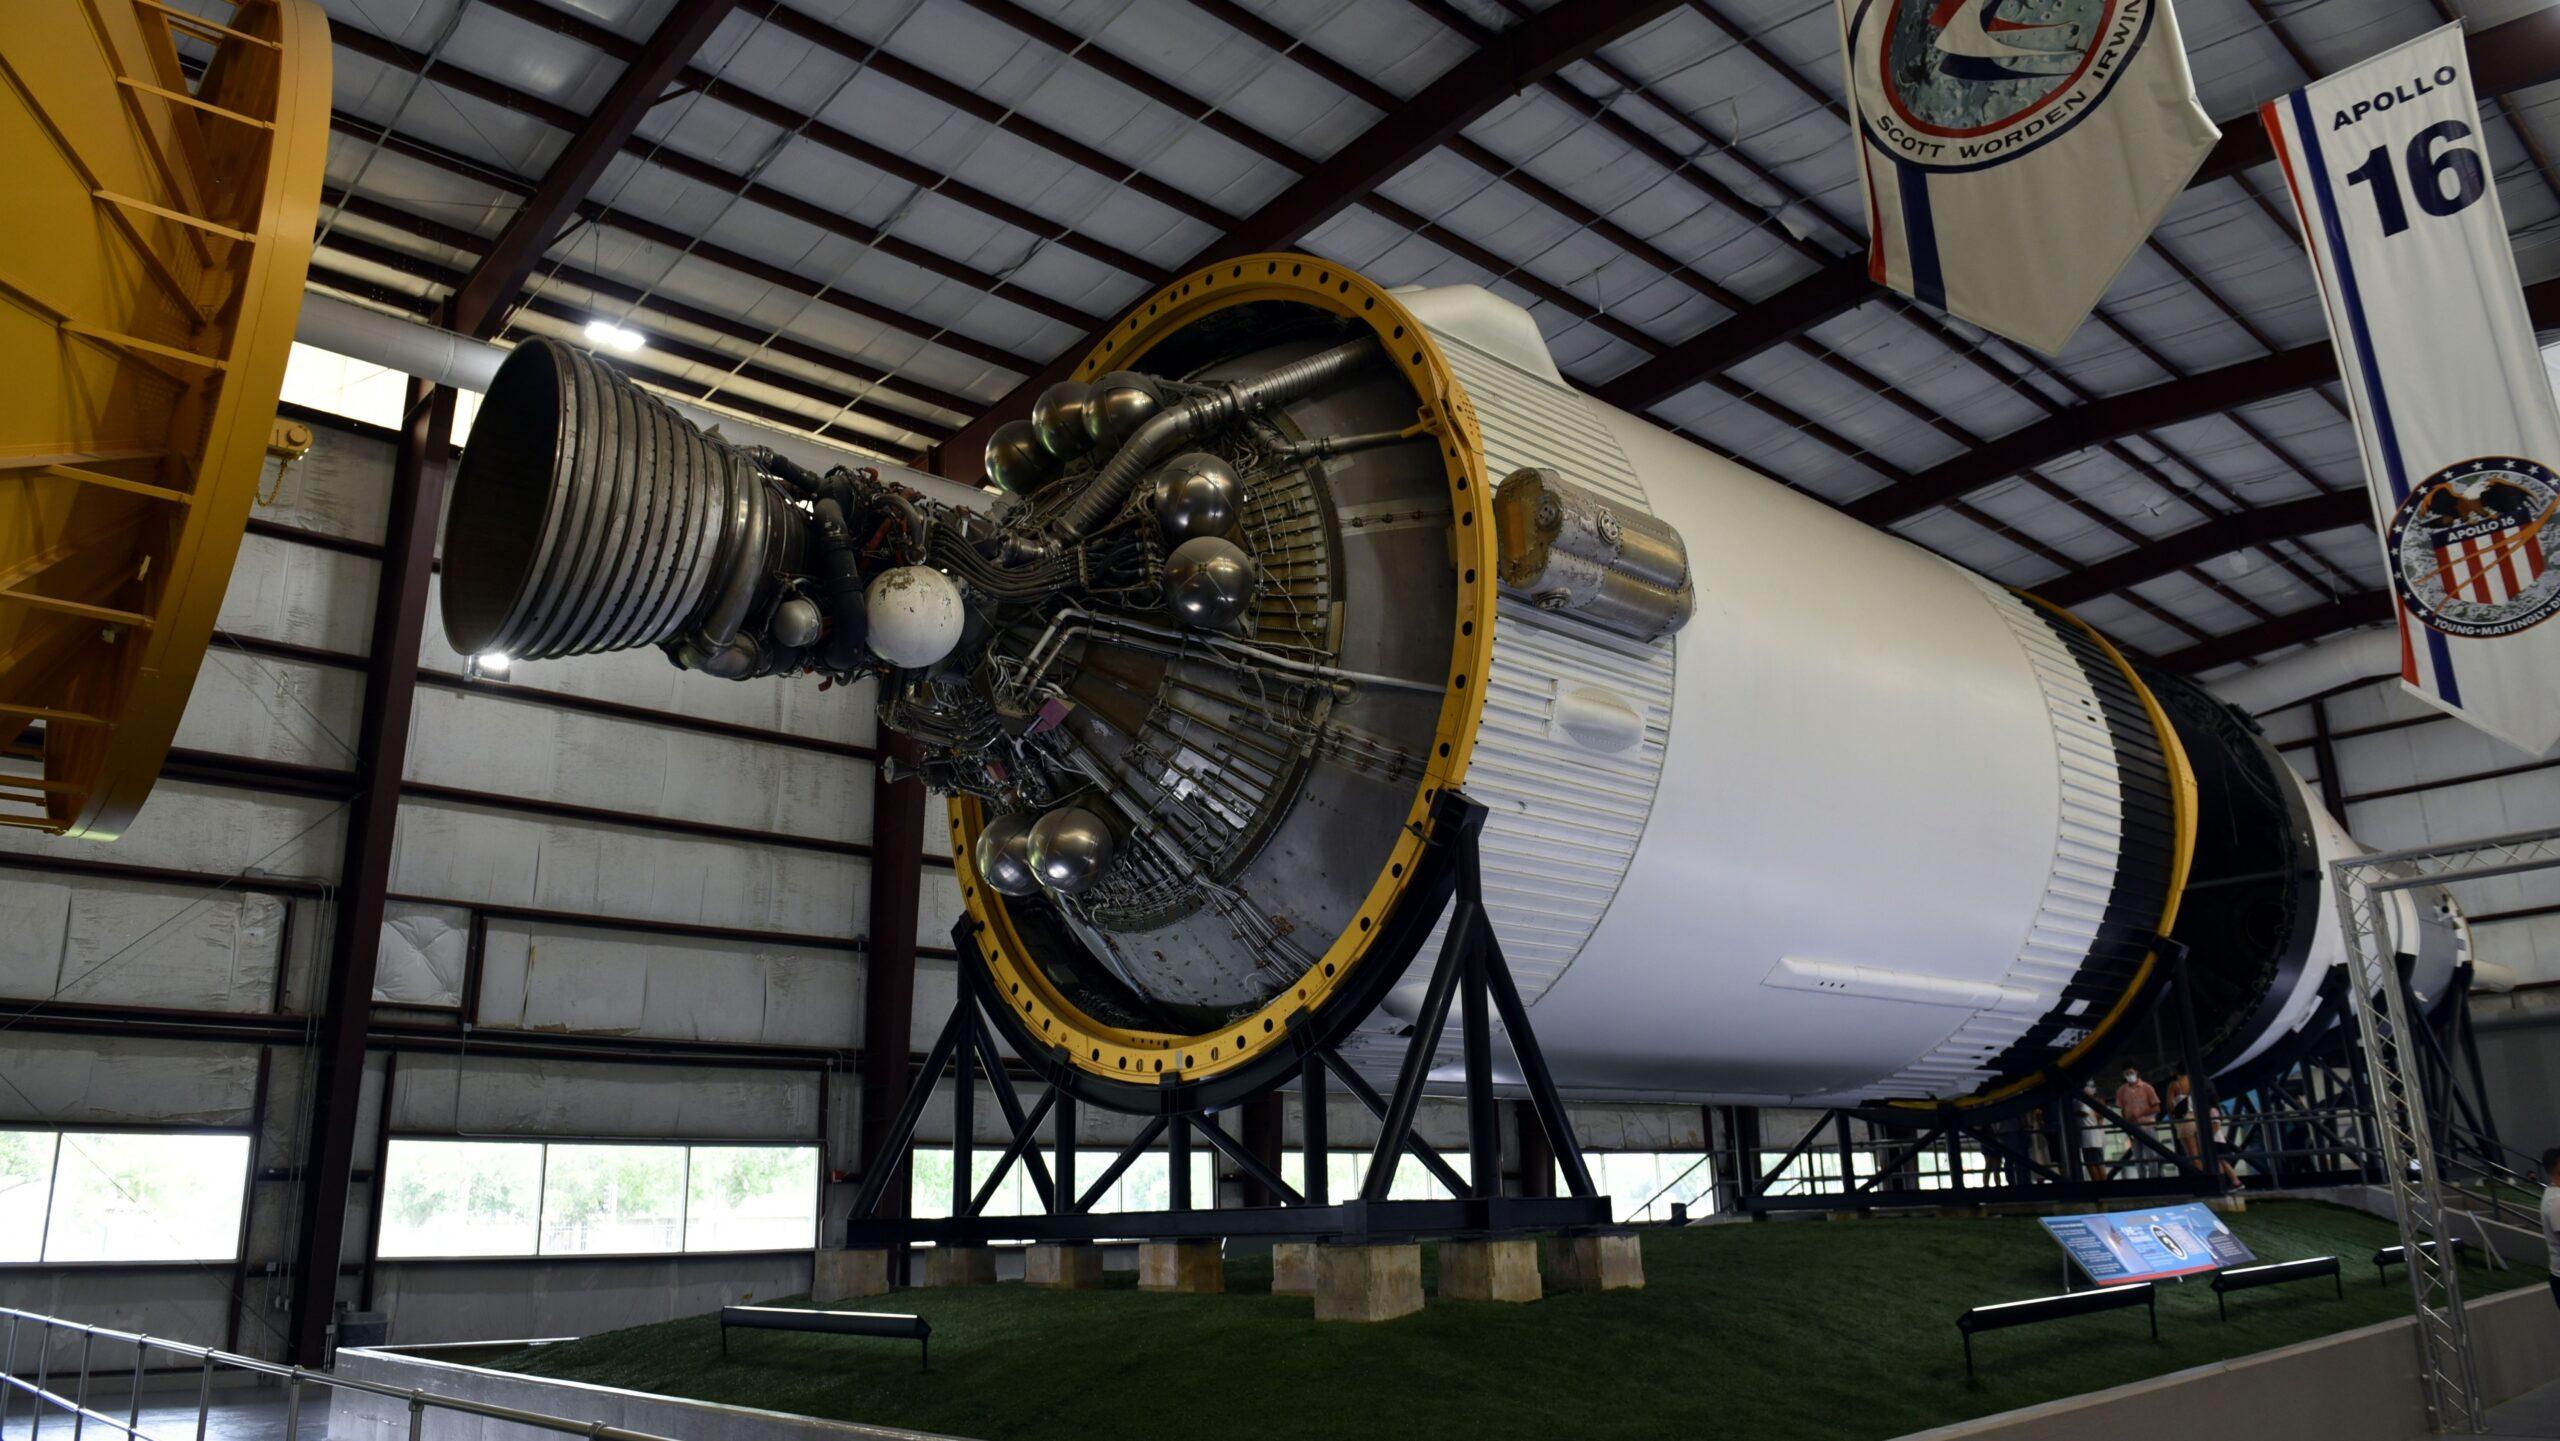 Part of the Apollo 16 space shuttle on display at NASA’s Lyndon B. Johnson Space Center in Houston, Texas.